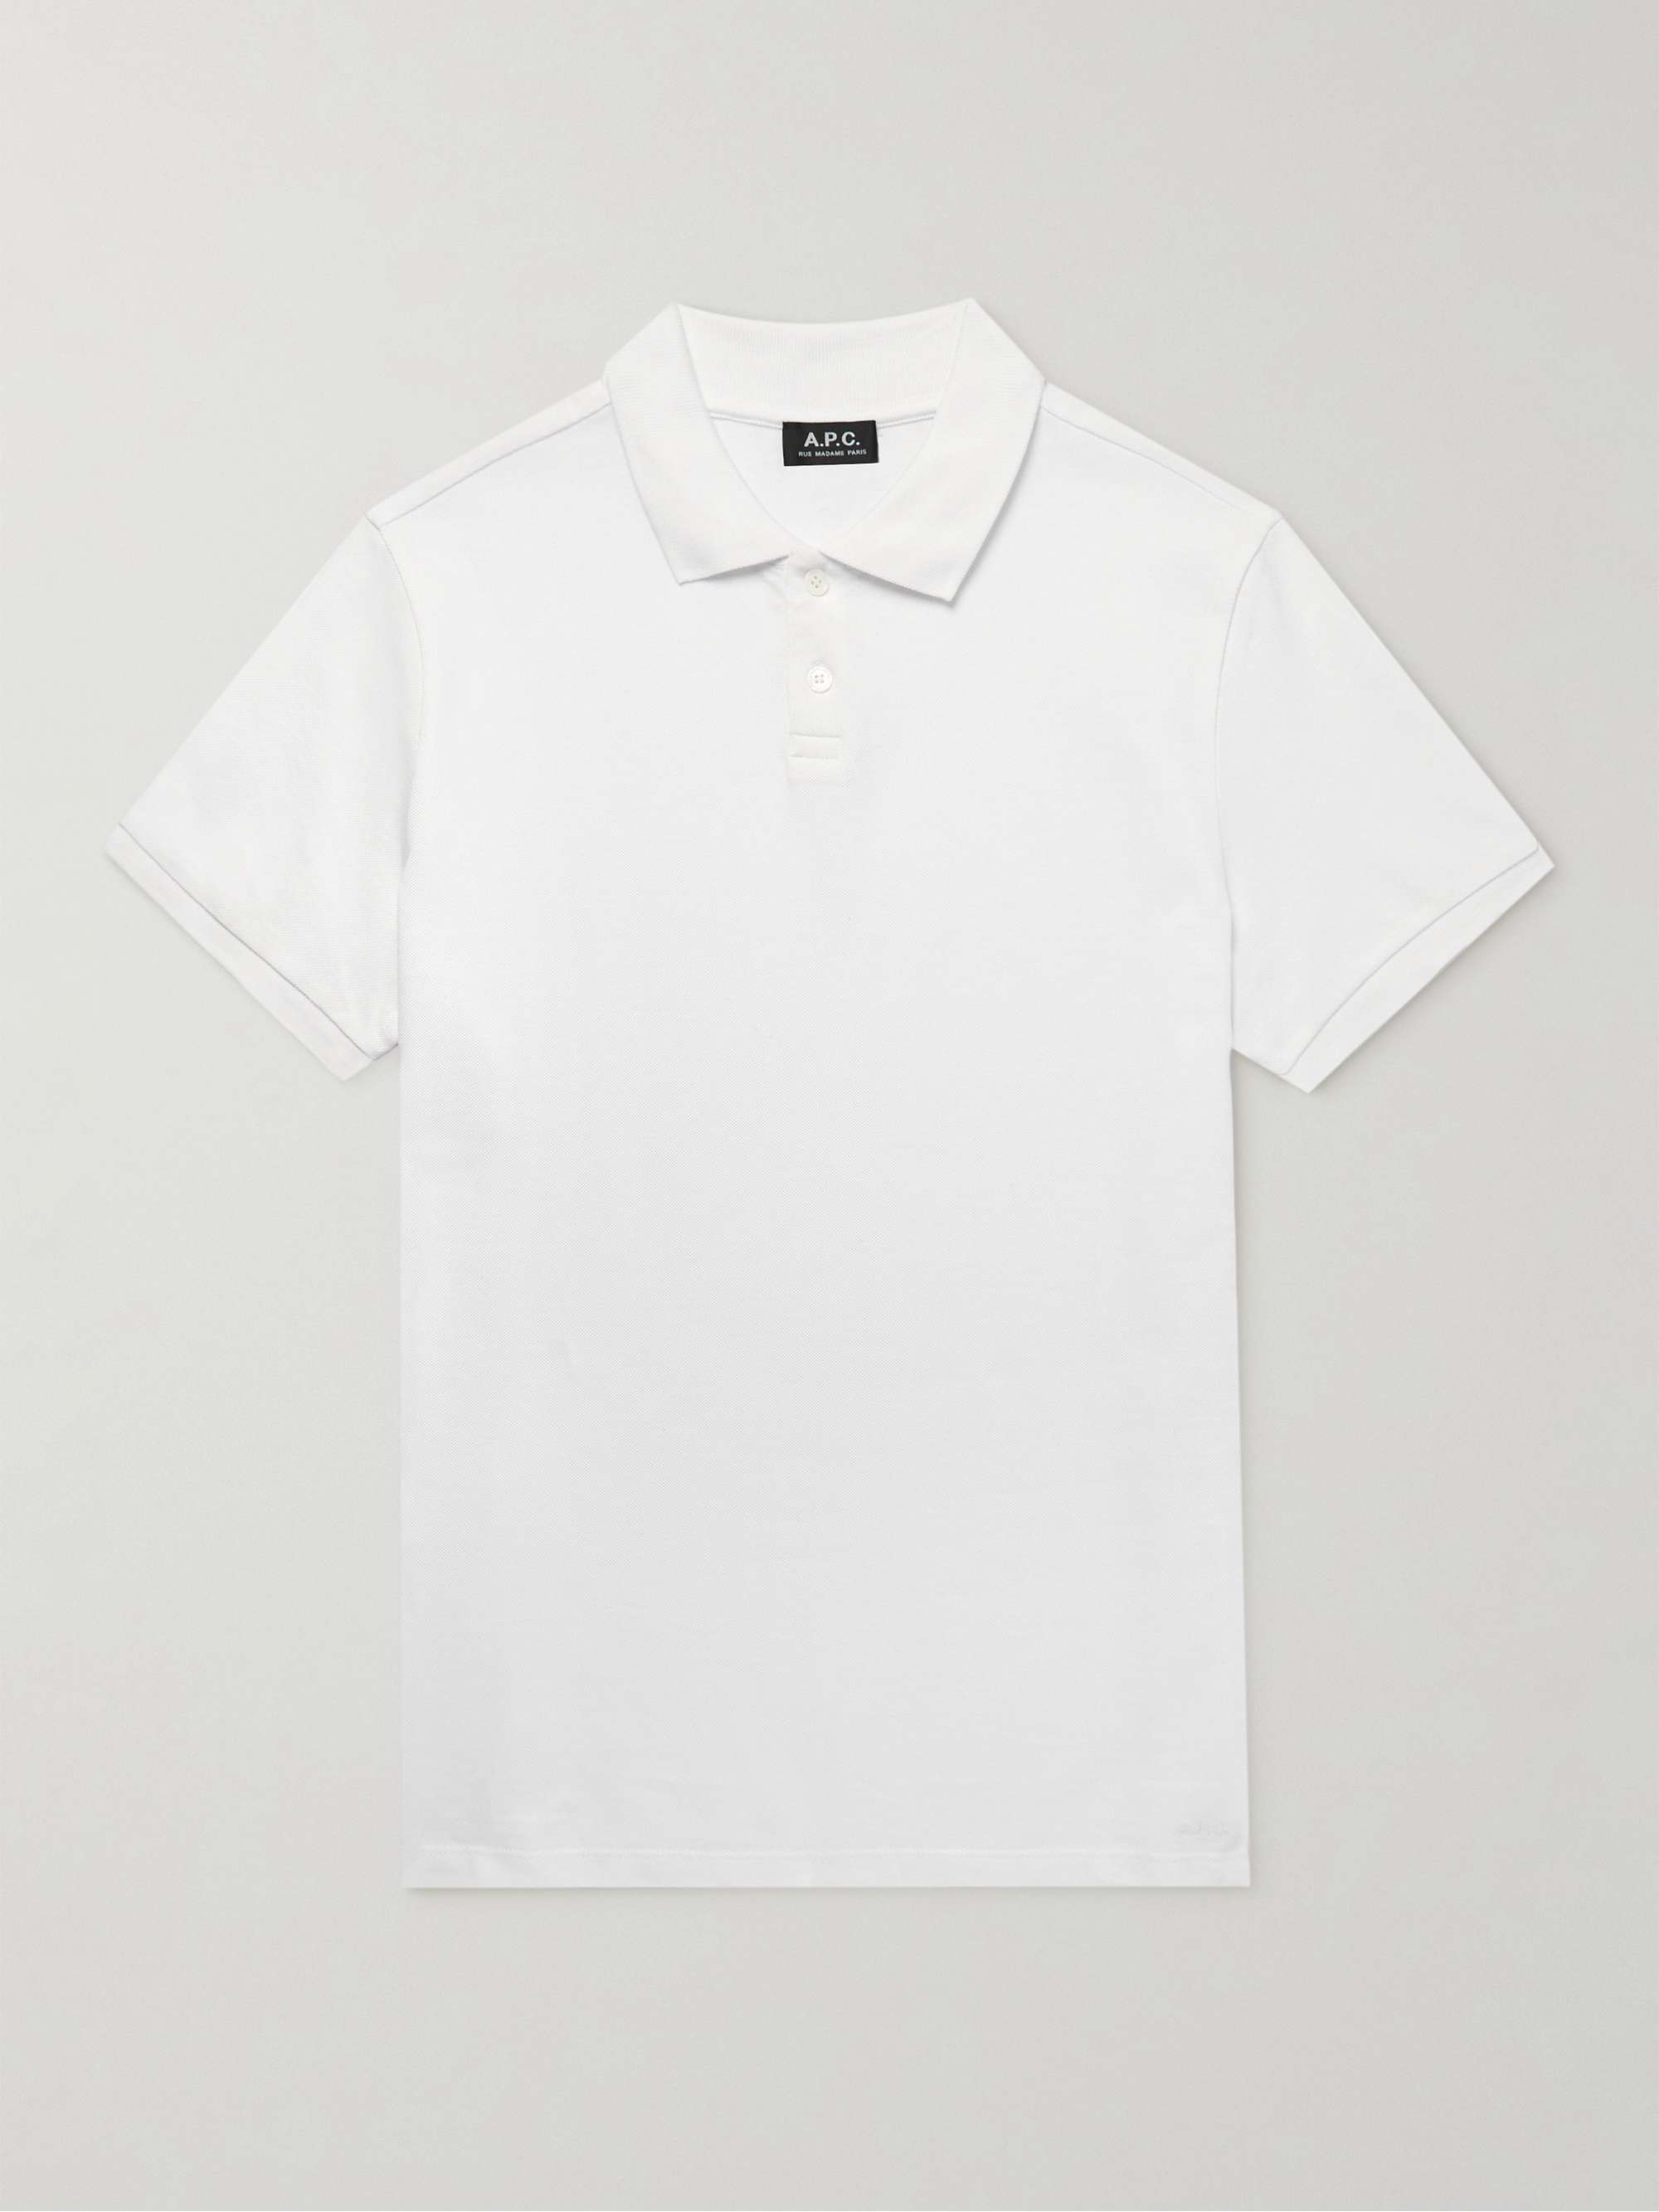 COTTON PIQUE  JERSEY-WHITE DRESS FABRIC-FREE P&P 